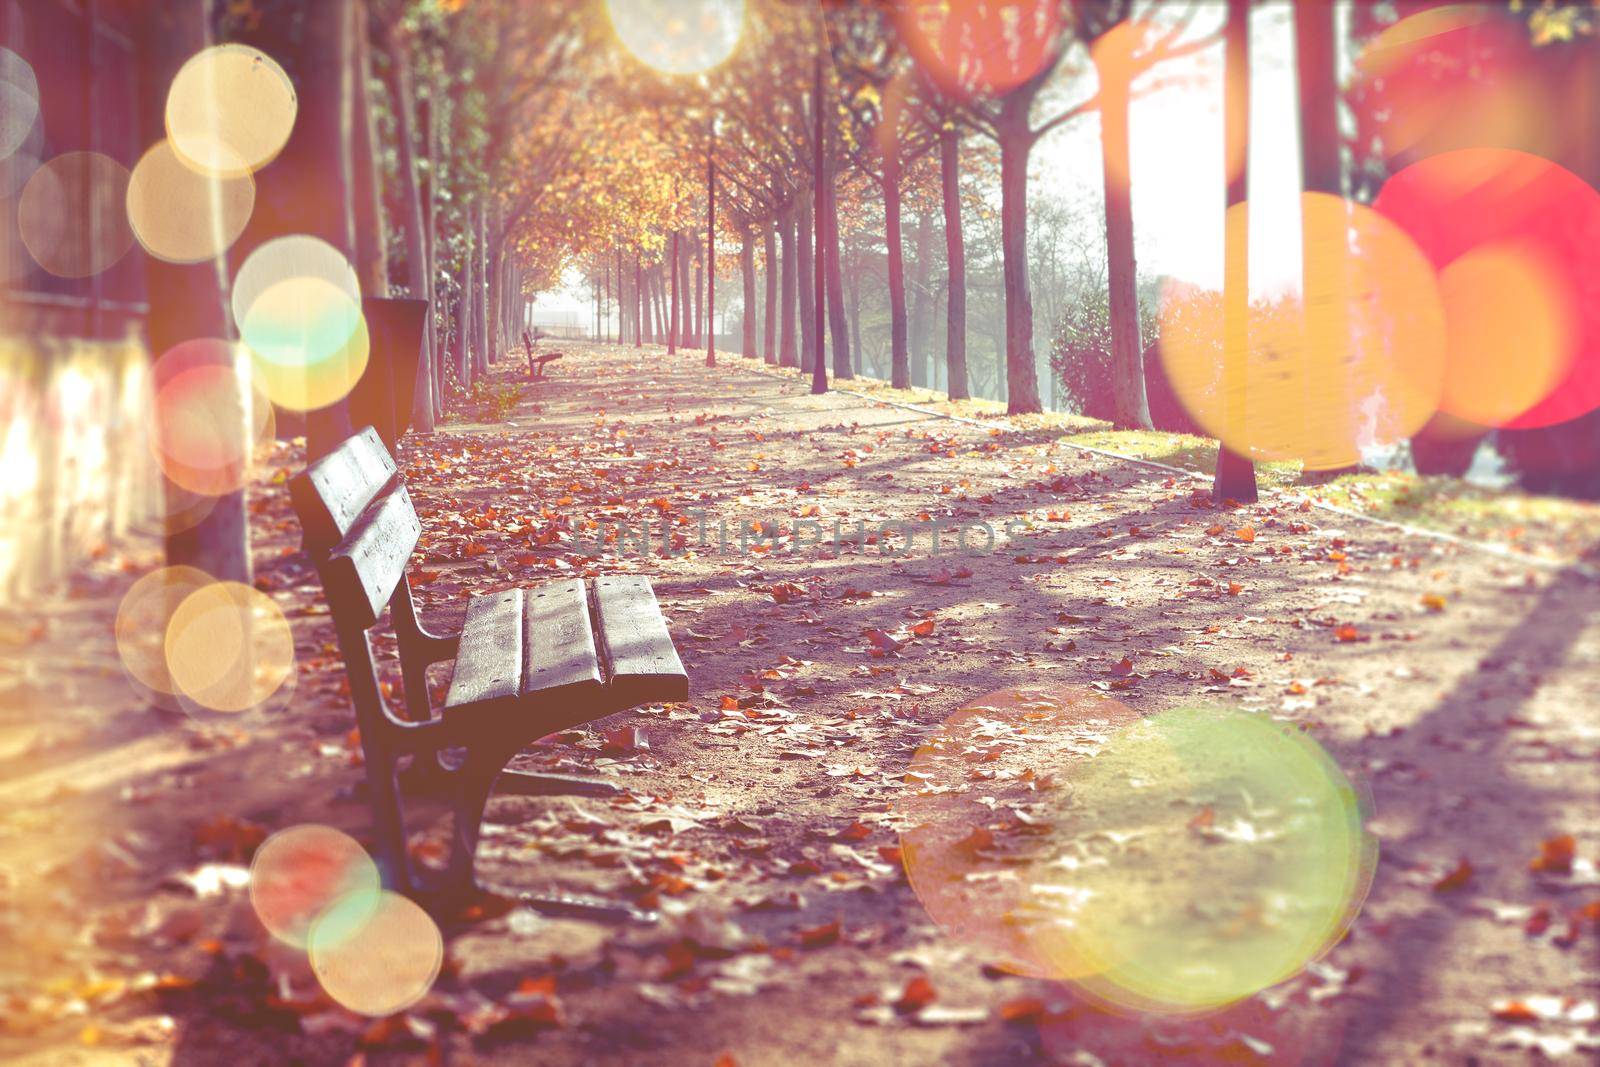 Abstract autumn background by carloscastilla